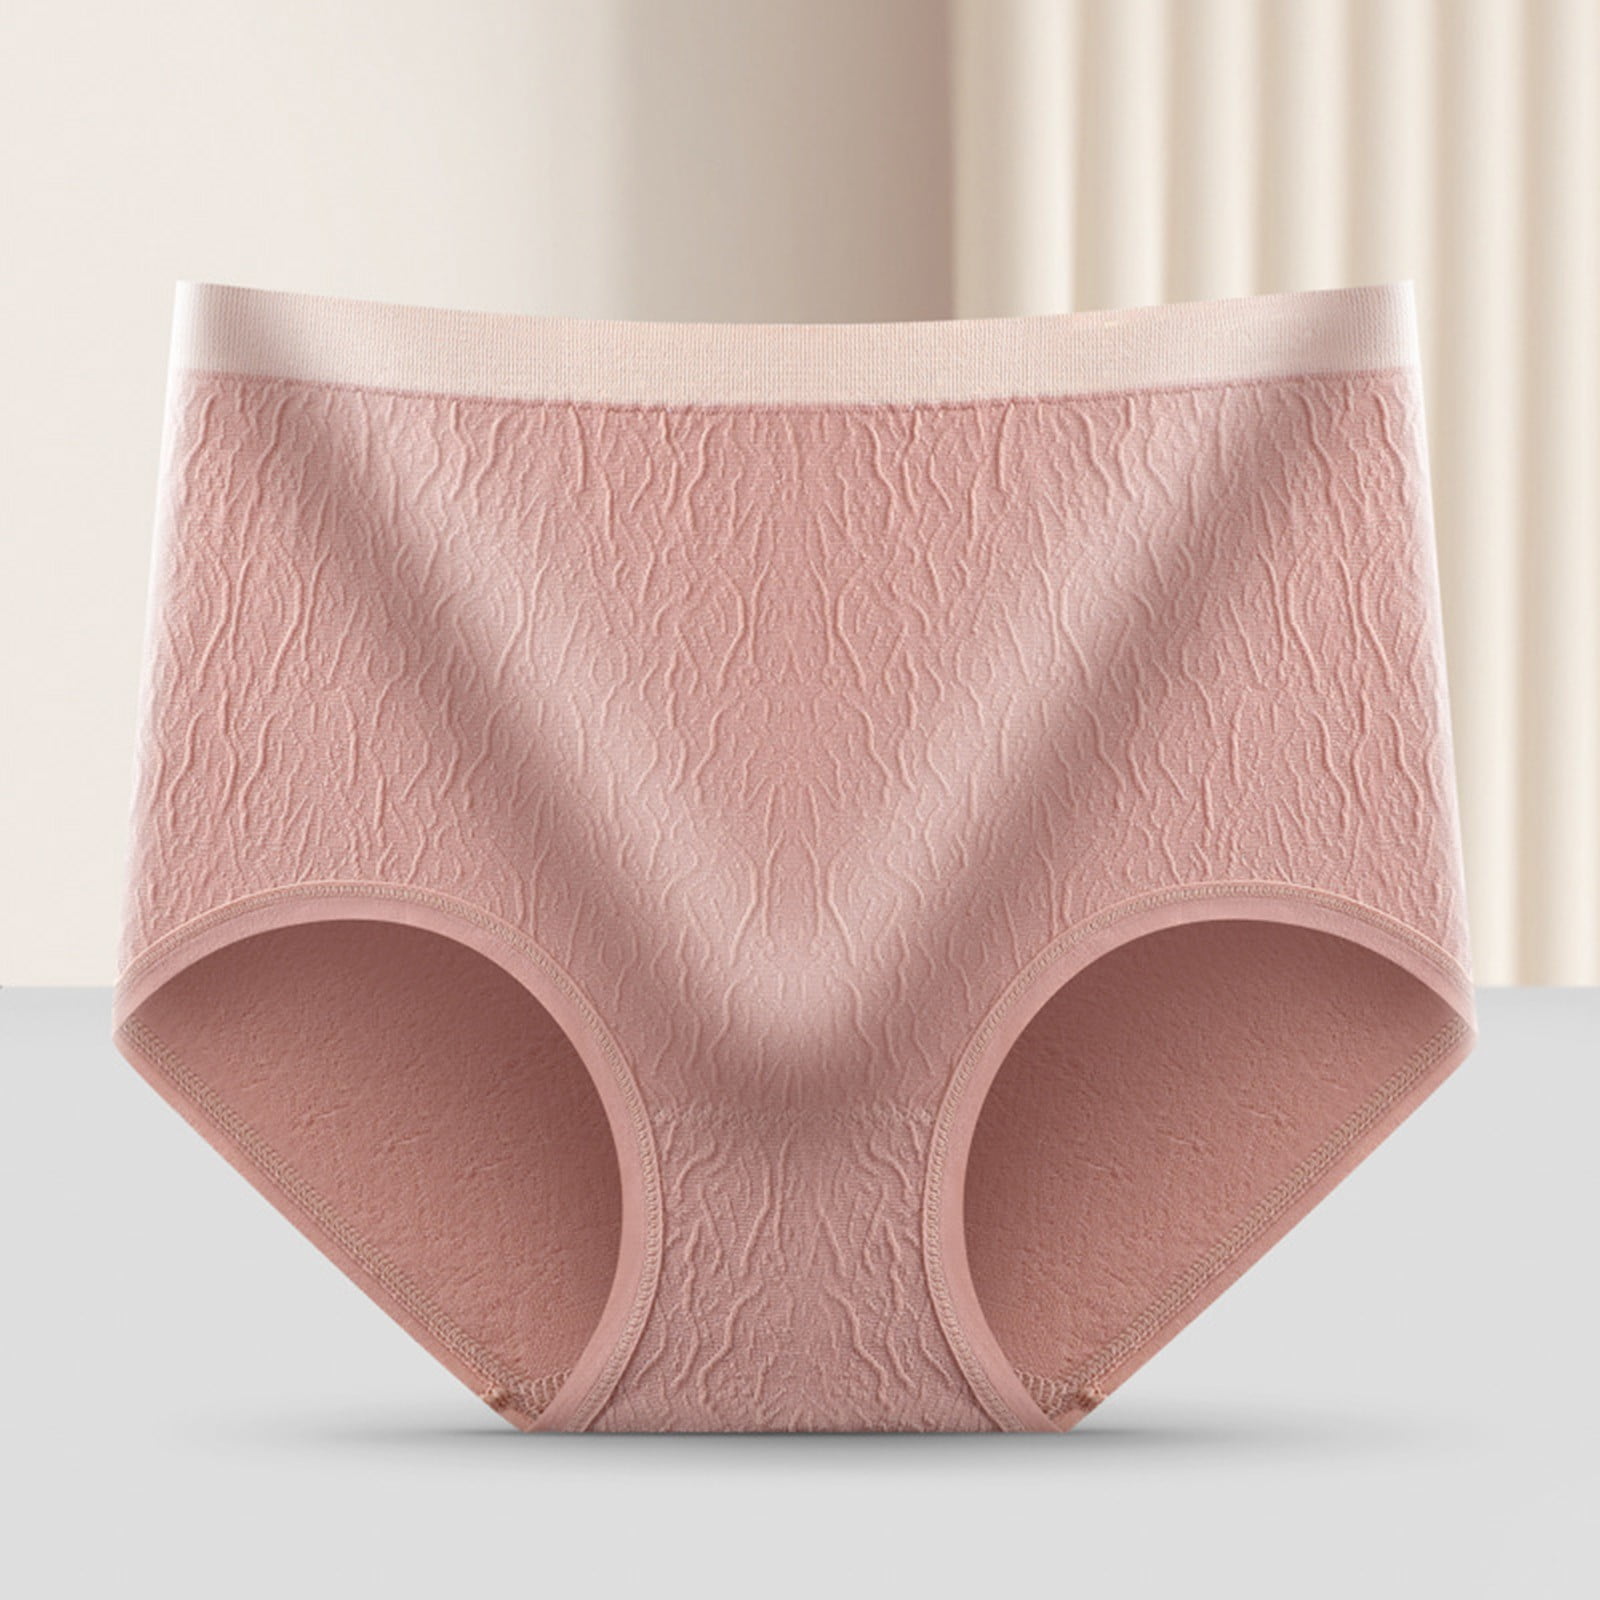 Aayomet Panties For Women Women High Waist Mesh Lace Underwear